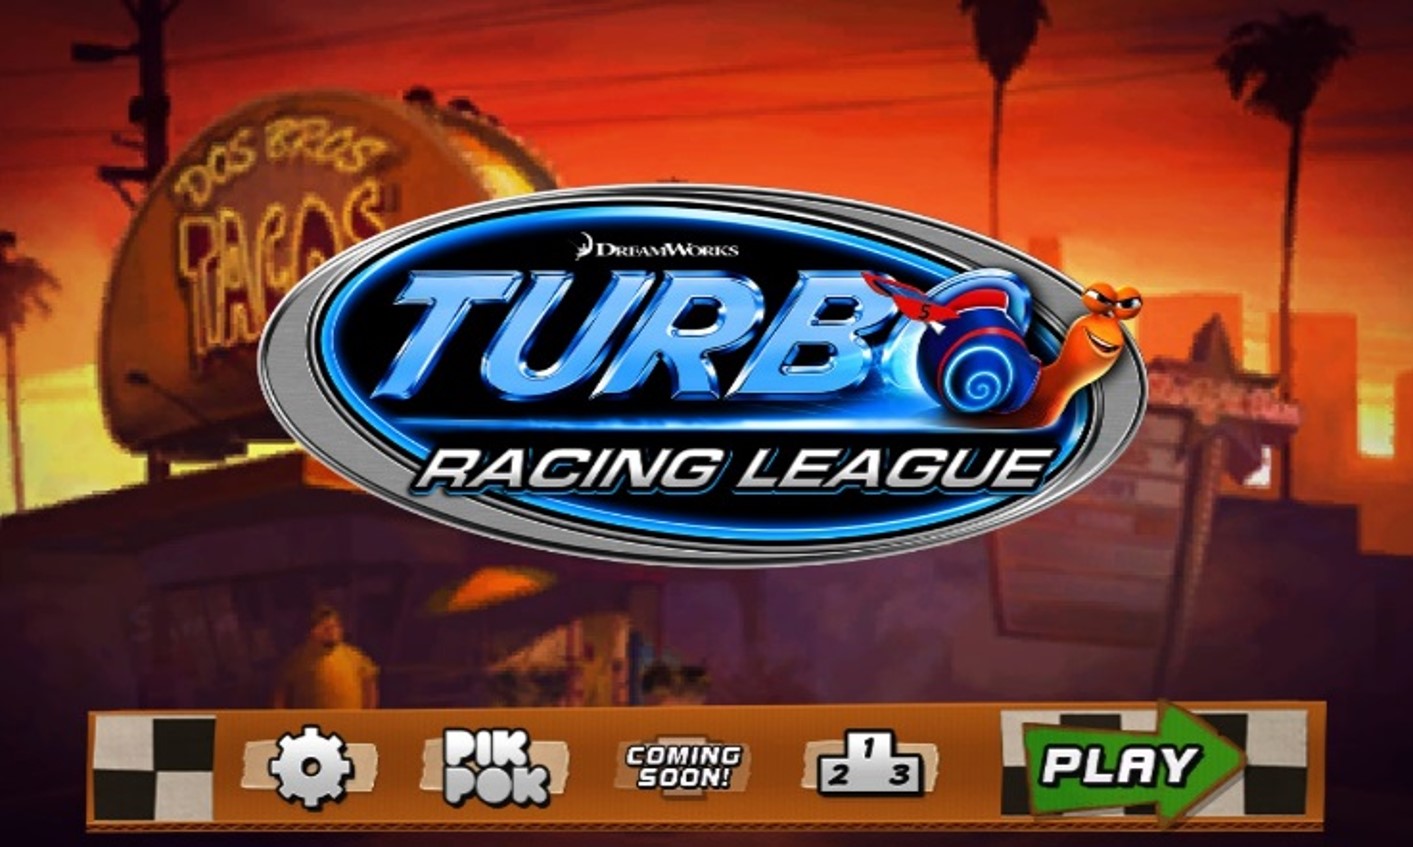 Dreamworks TURBO Racing League